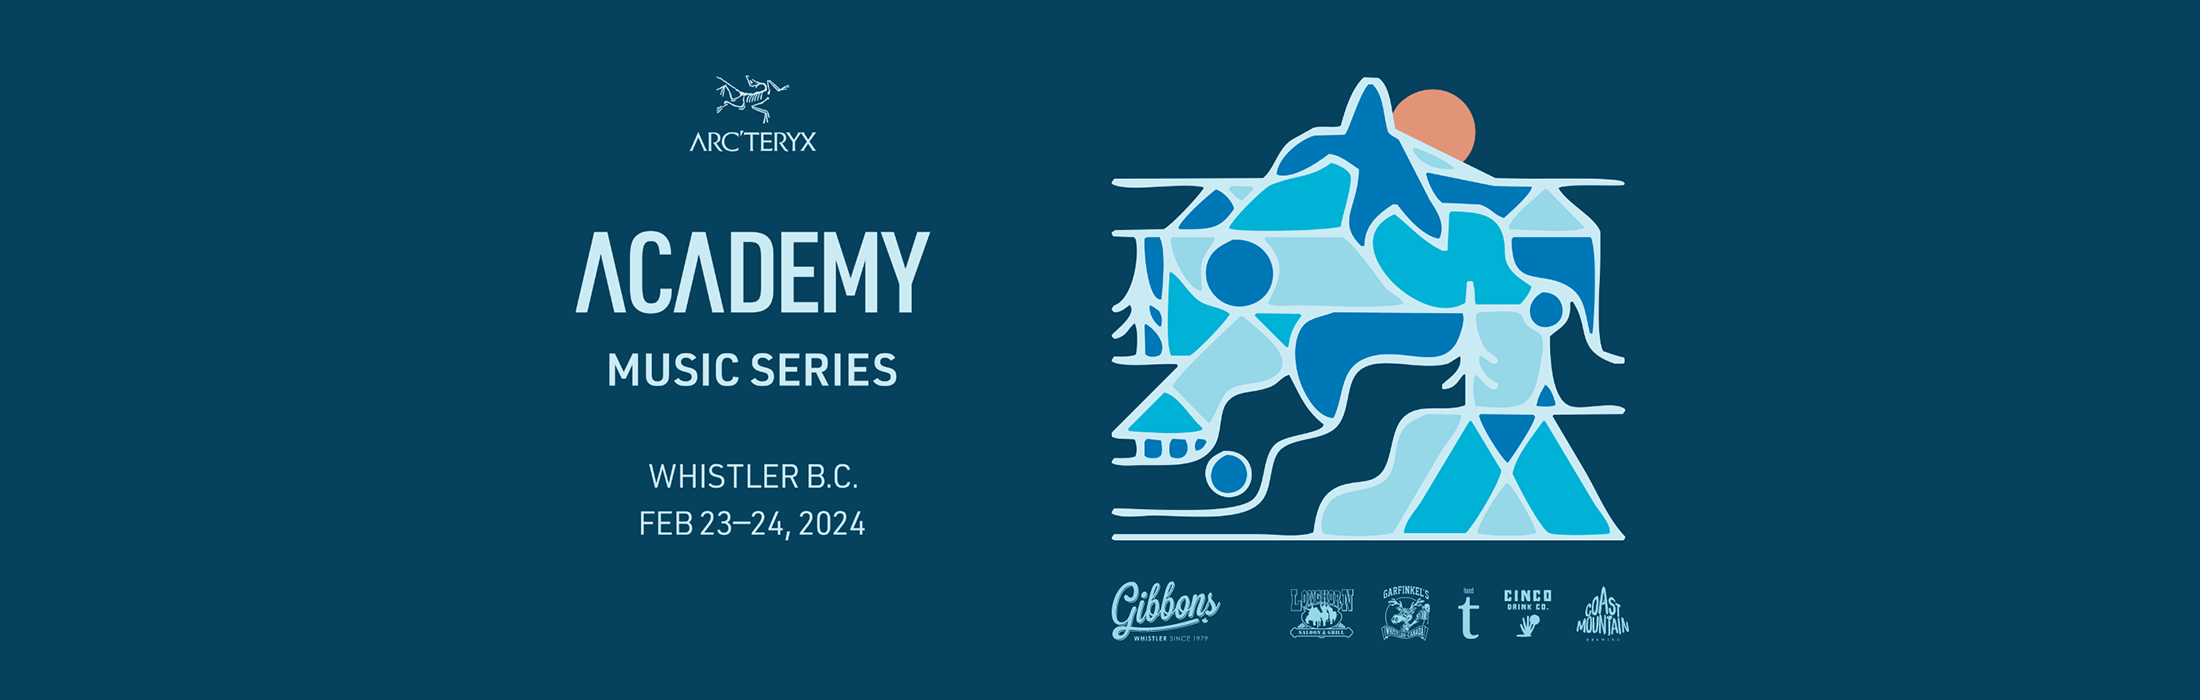 Arc'teryx Academy Music Series